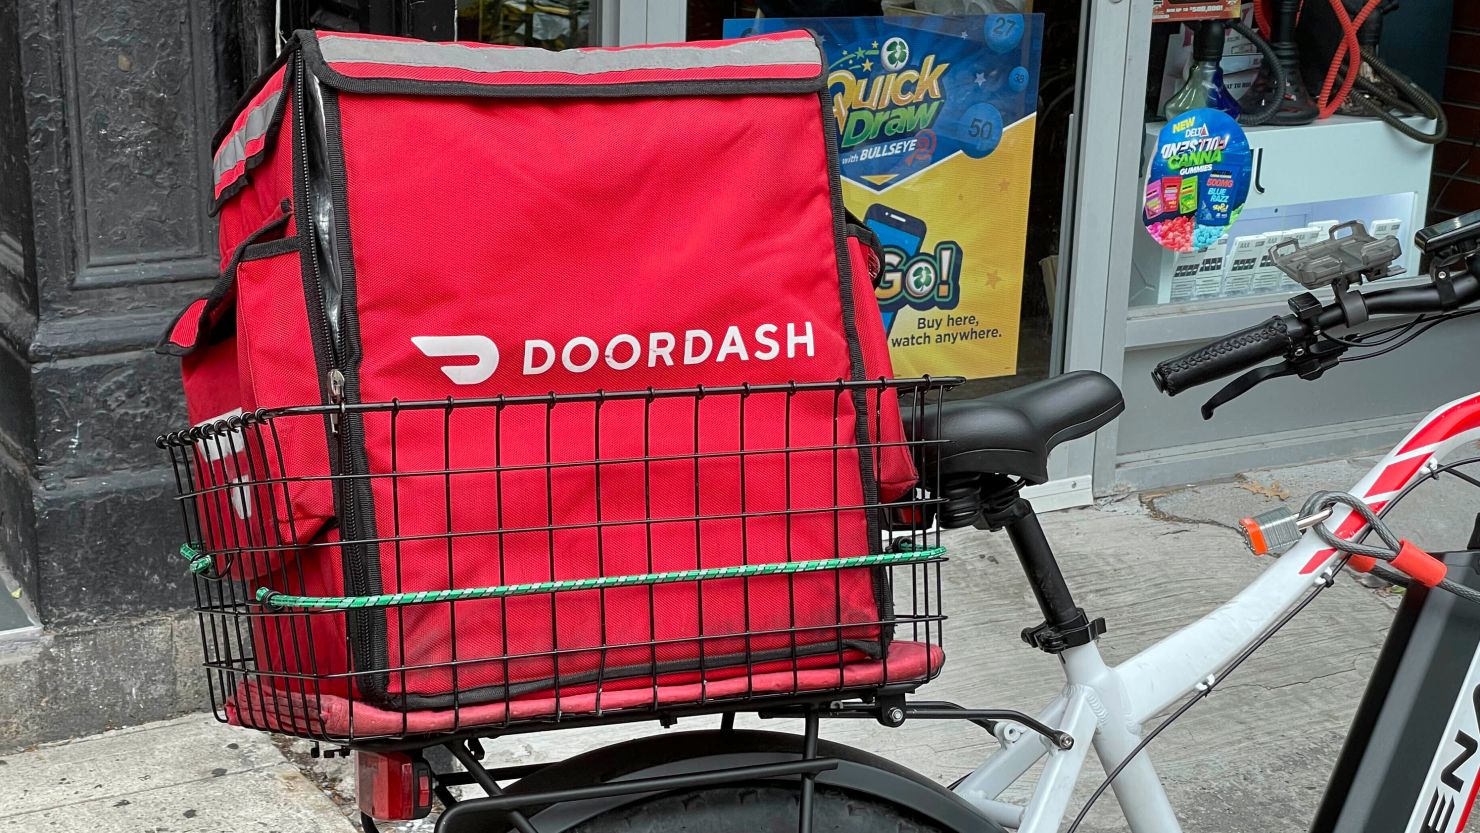 A DoorDash delivery bike is seen in Manhattan.